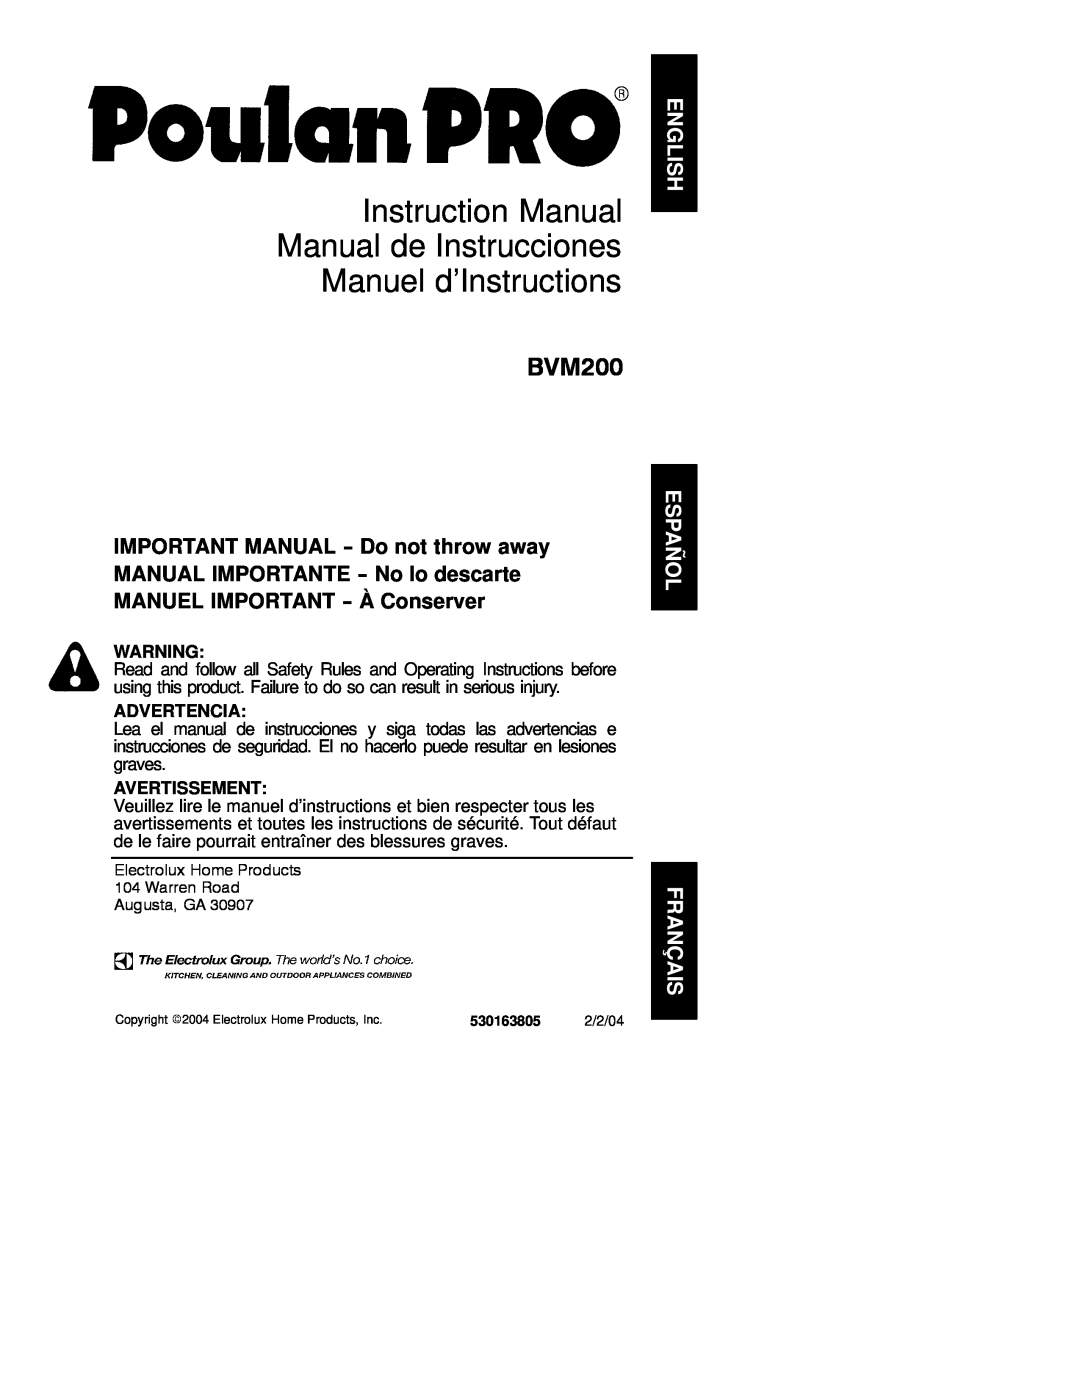 Poulan 530163805 instruction manual BVM200, Advertencia, Avertissement 